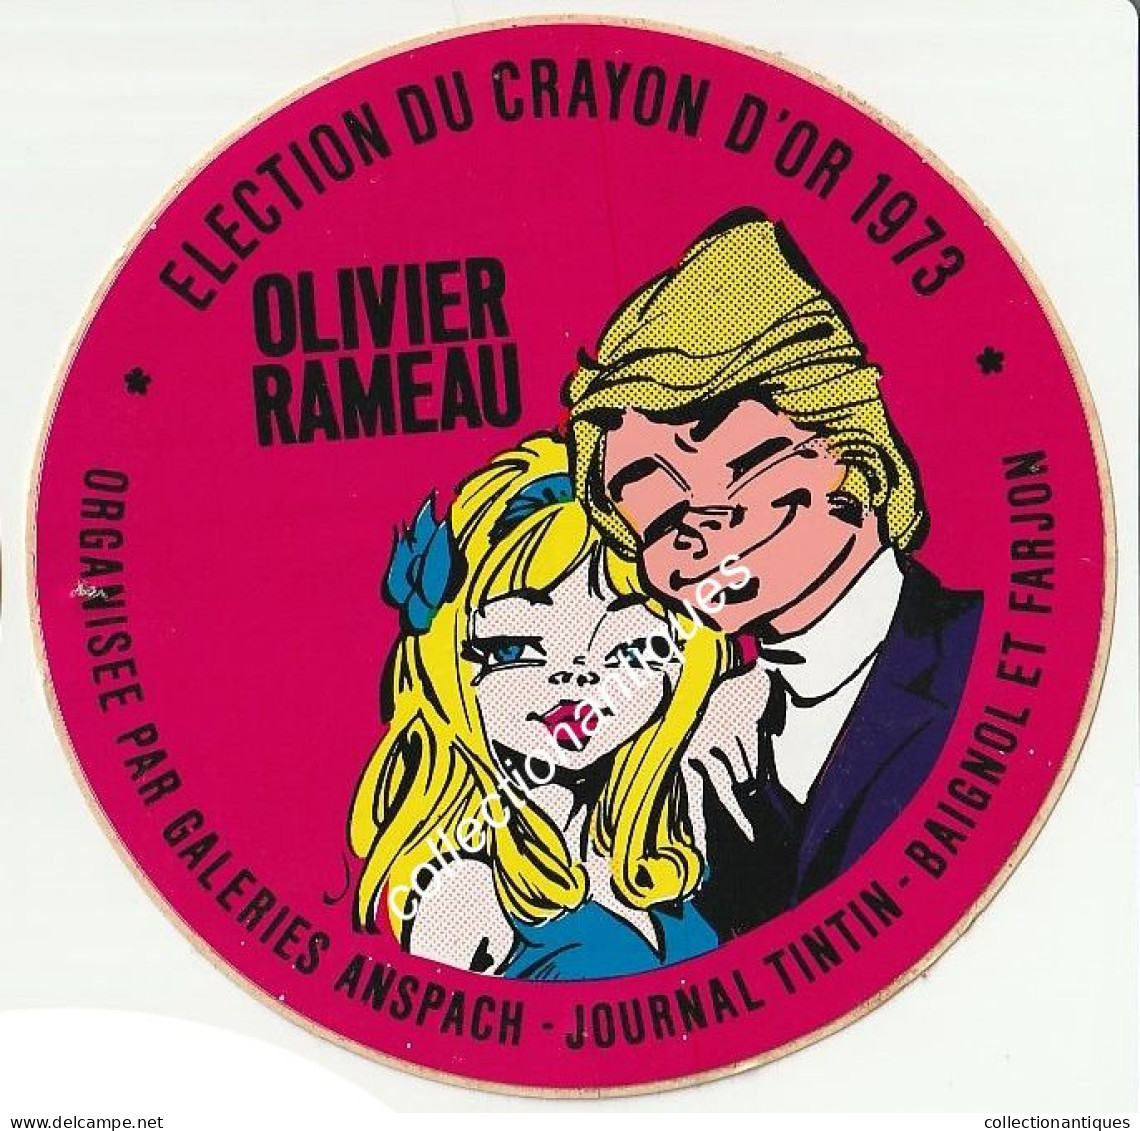 Olivier Rameau RARE Sticker Autocollant Election Du Crayon D'Or 1973 Galeries Anspach Journal Tintin Baignol Et Farjon - Adesivi